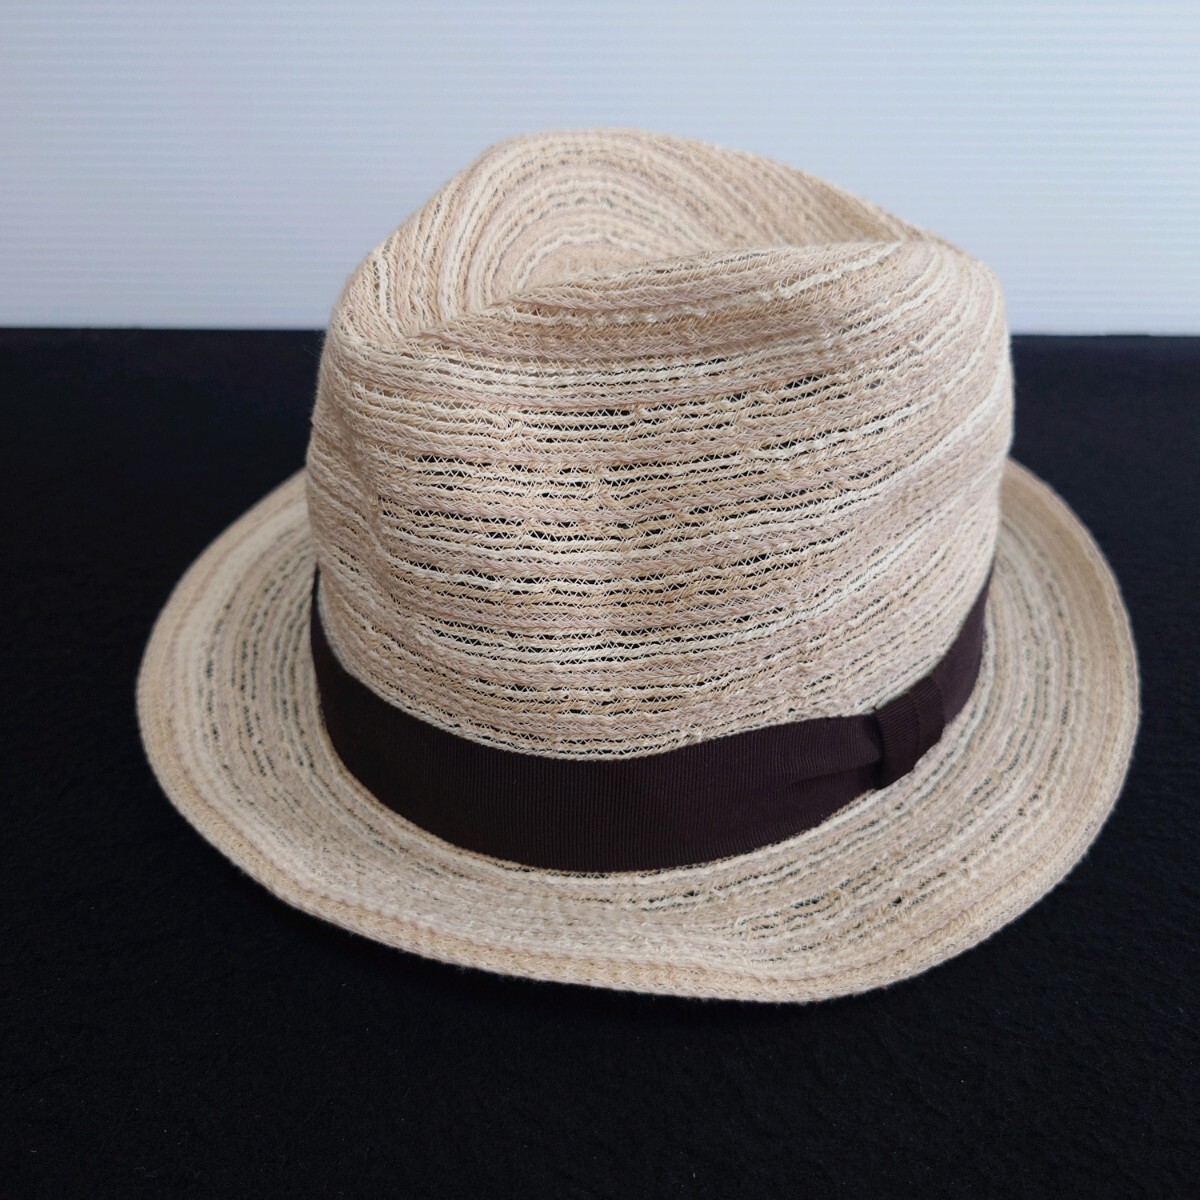 Zukin 日本製 中折れハット 帽子 Lサイズ レディース ベージュ_画像1